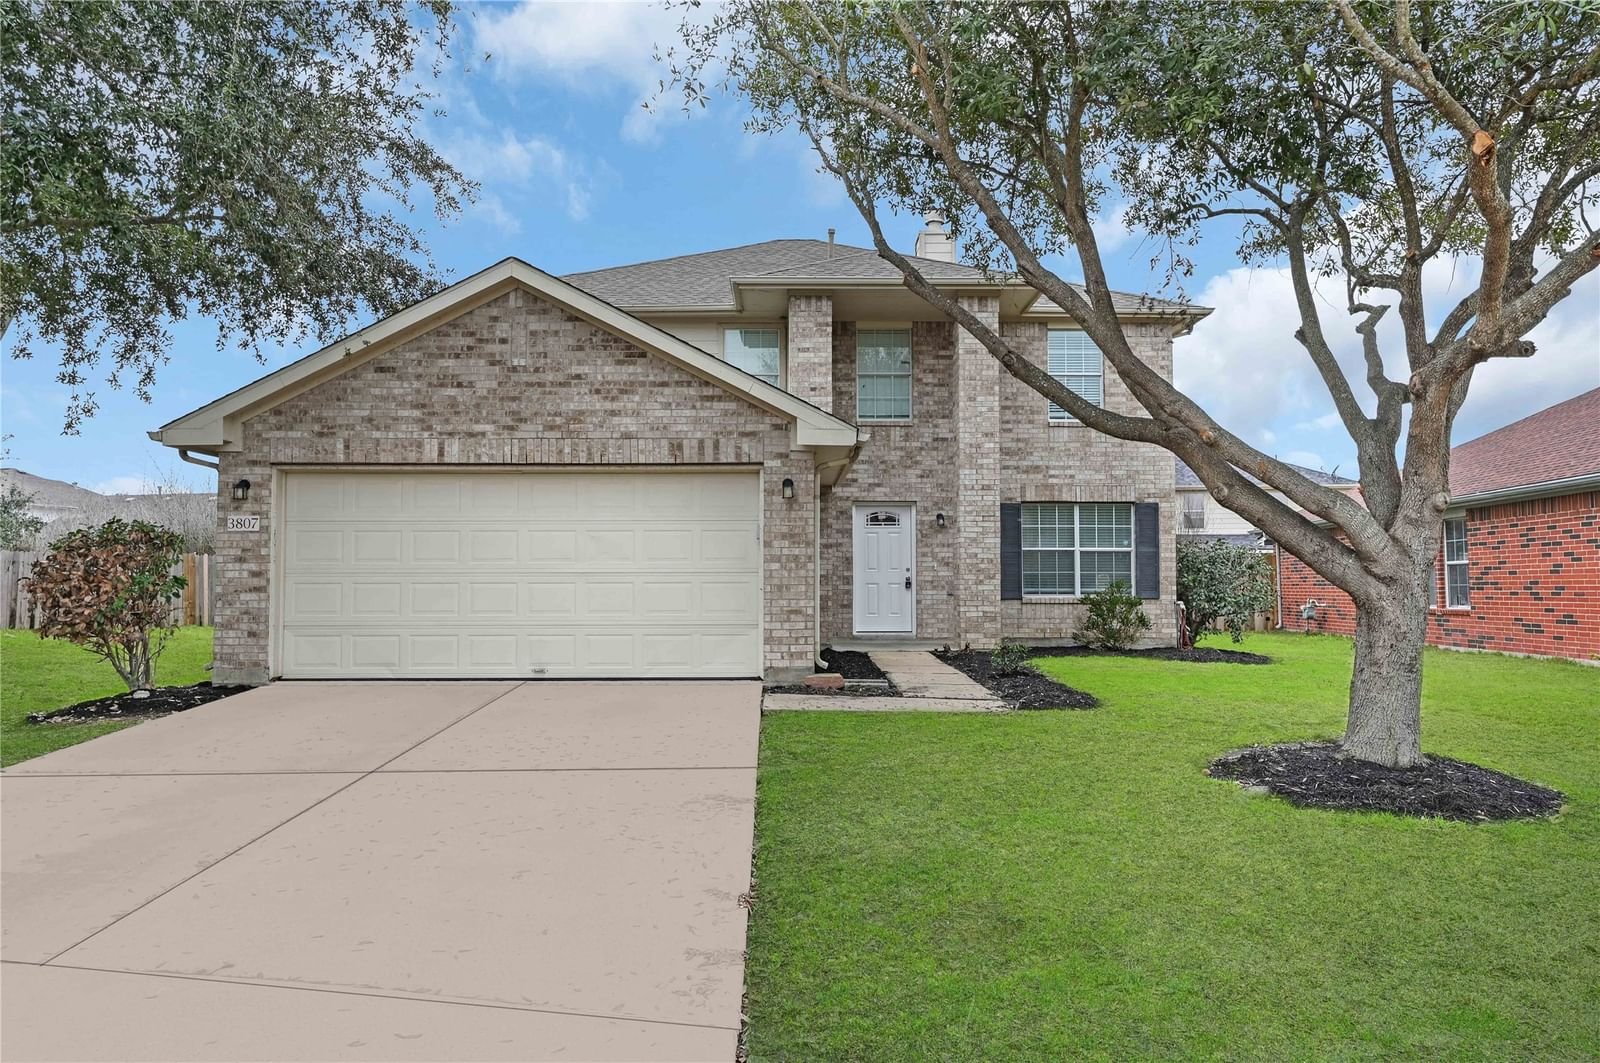 Real estate property located at 3807 Brook Garden, Harris, Lakes Bridgewater Sec 07, Katy, TX, US